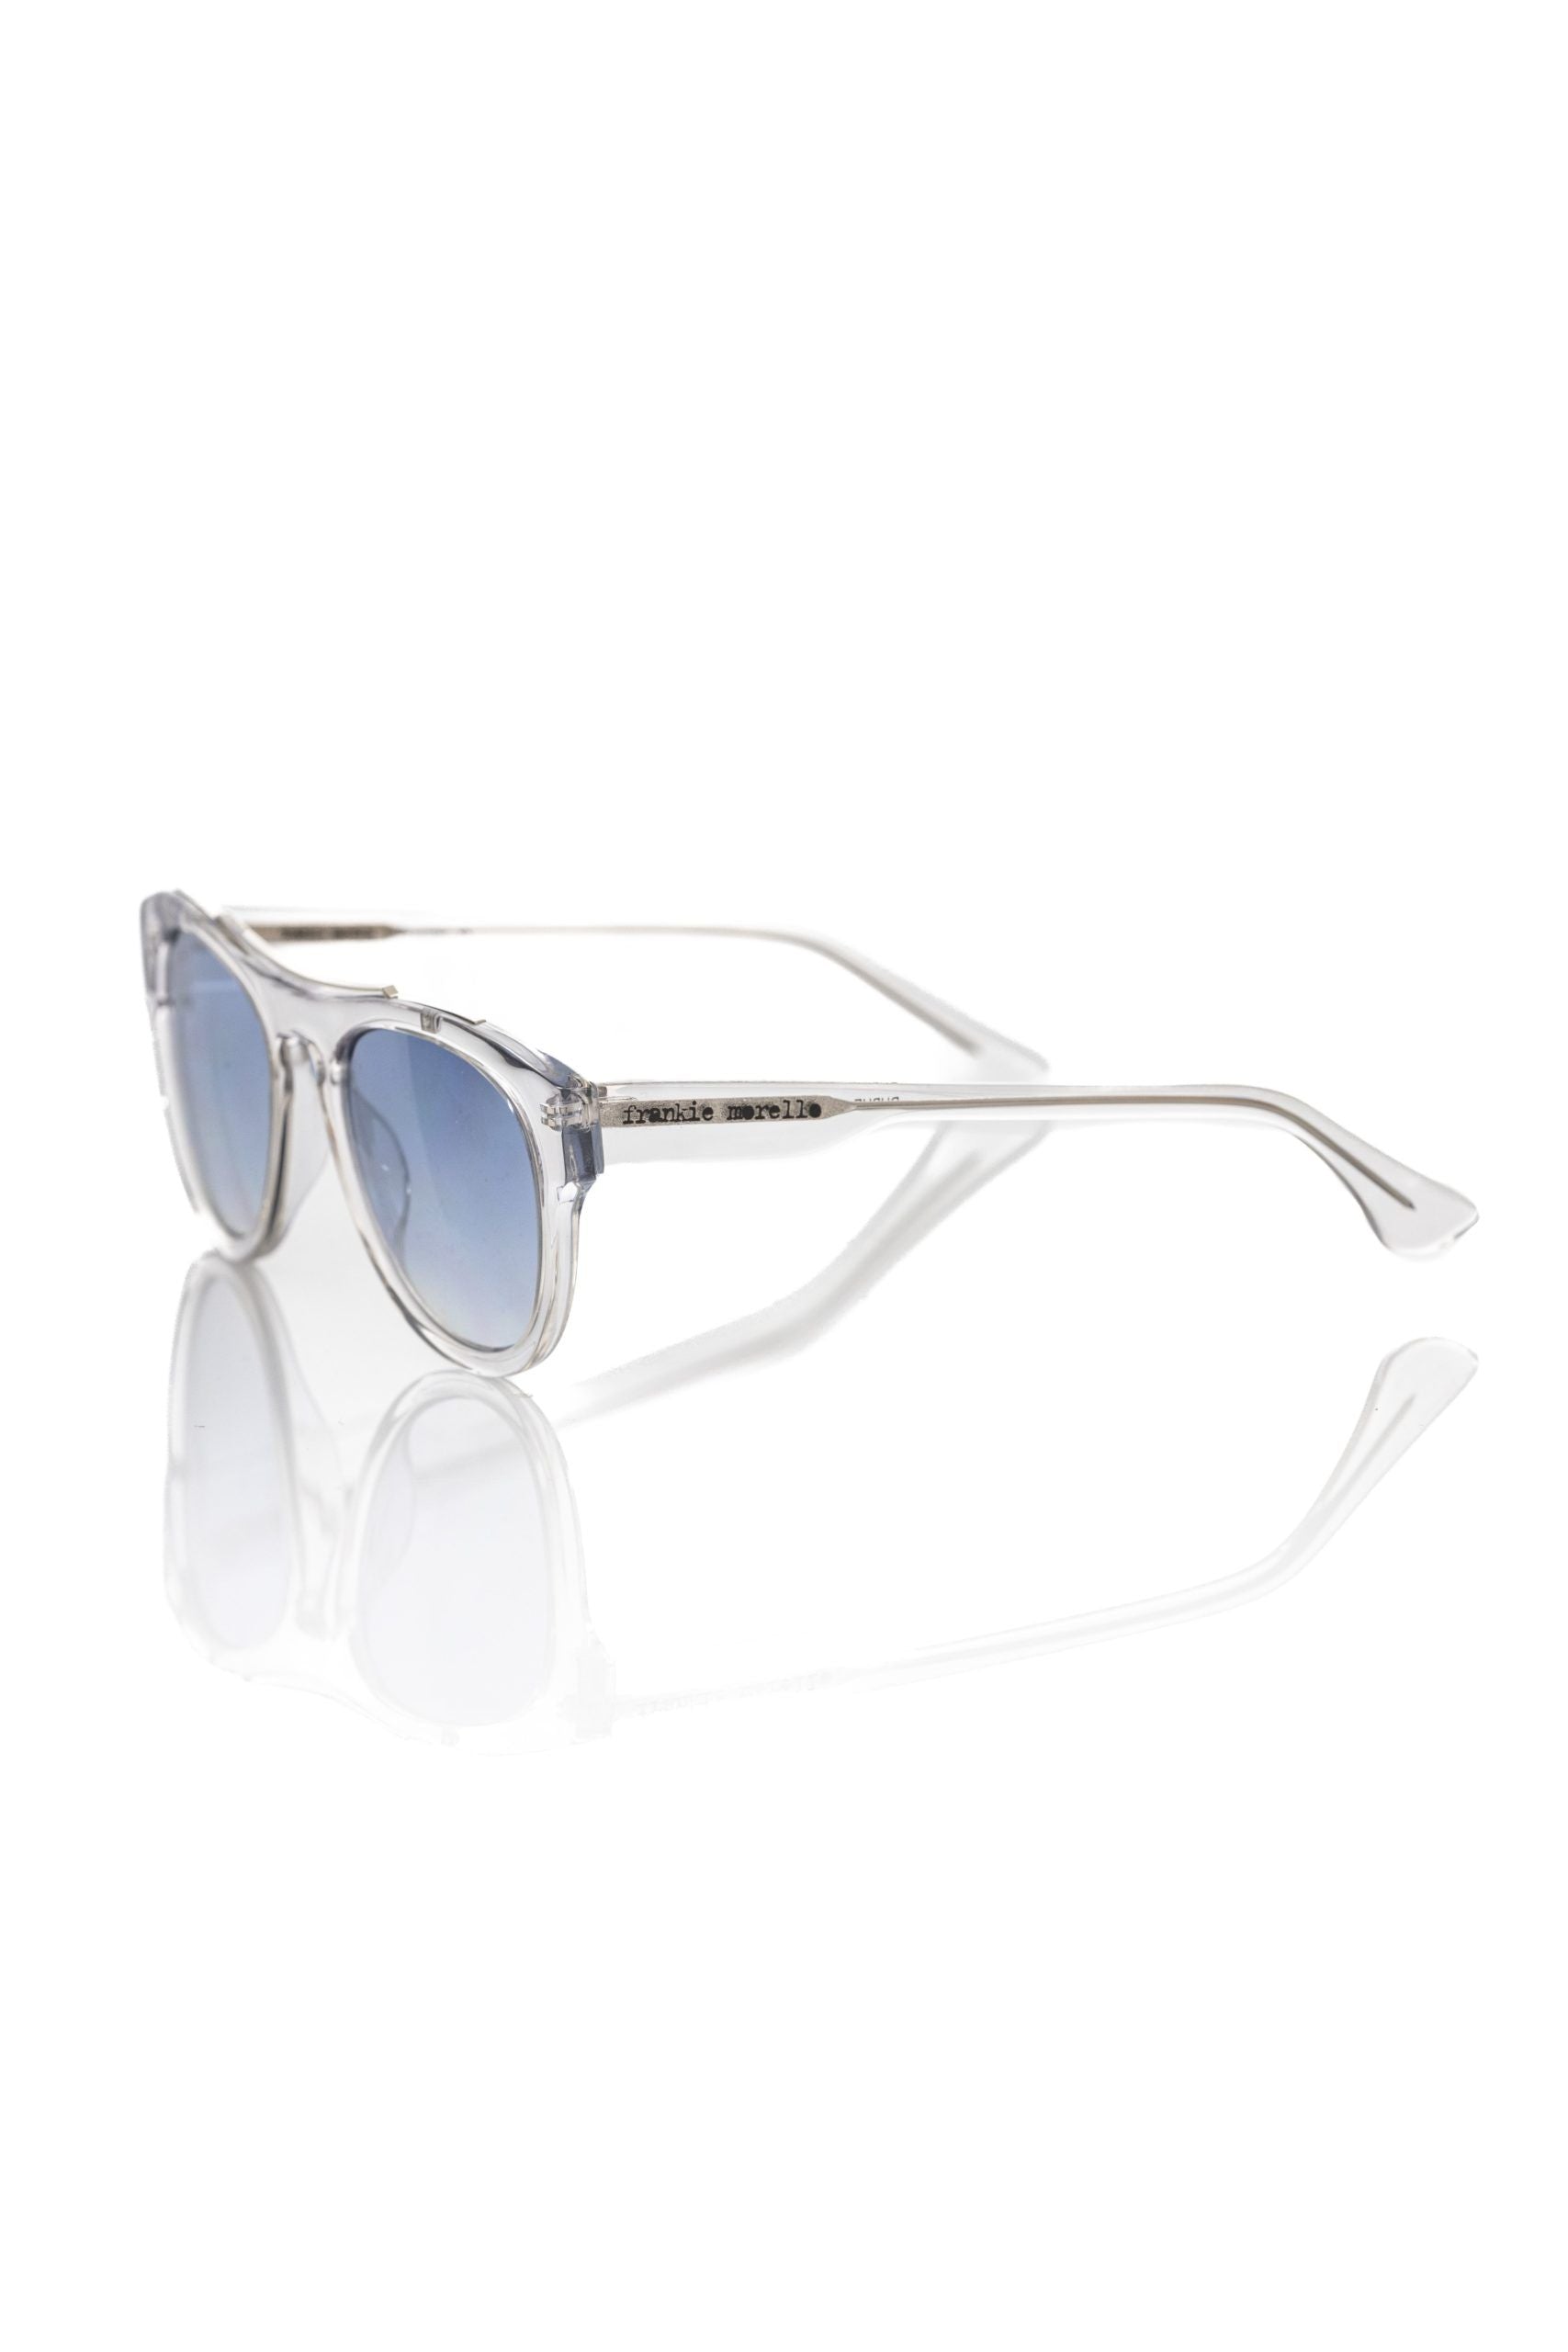 Frankie Morello Chic Shaded Blue Lens Wayfarer Sunglasses